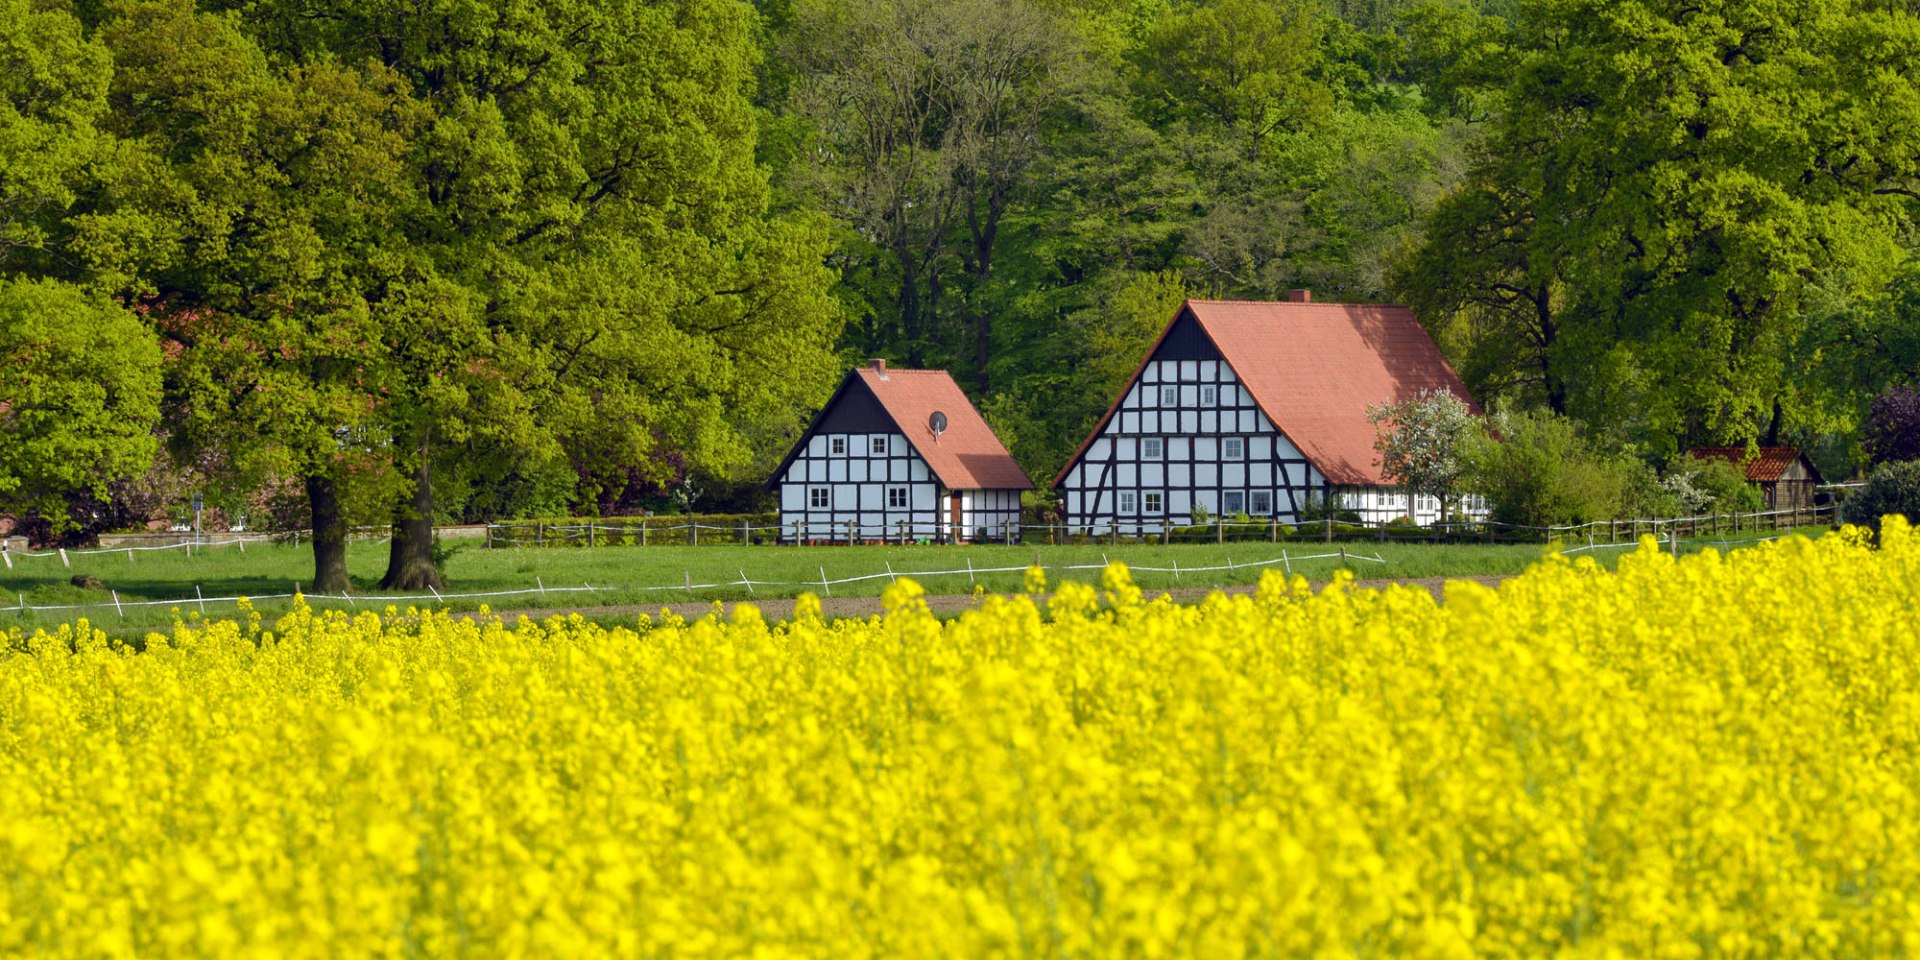 Hügelige Landschaft mit Fachwerkhäusern am Wiehengebirge bei Ostercappeln-Venne, © Tourismusverband Osnabrücker Land e.V./ Dieter Schinner